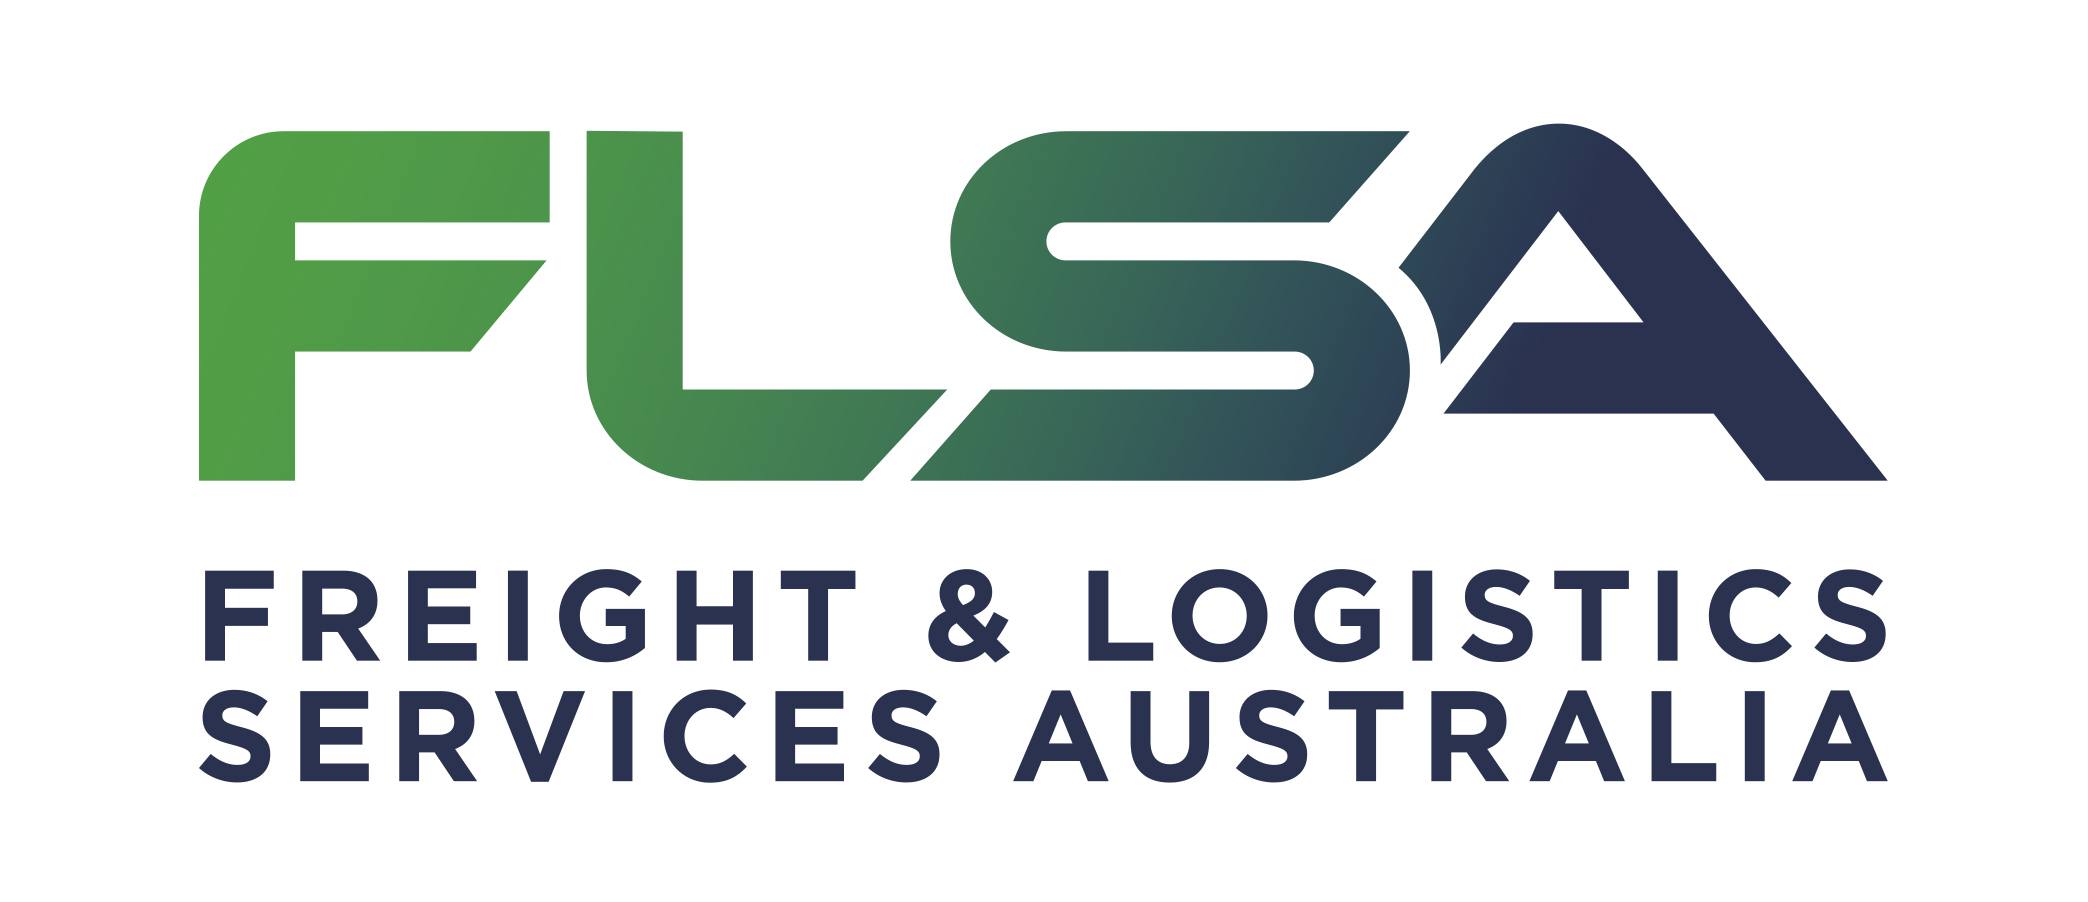 Freight & Logistics Services Australia Pty Ltd.